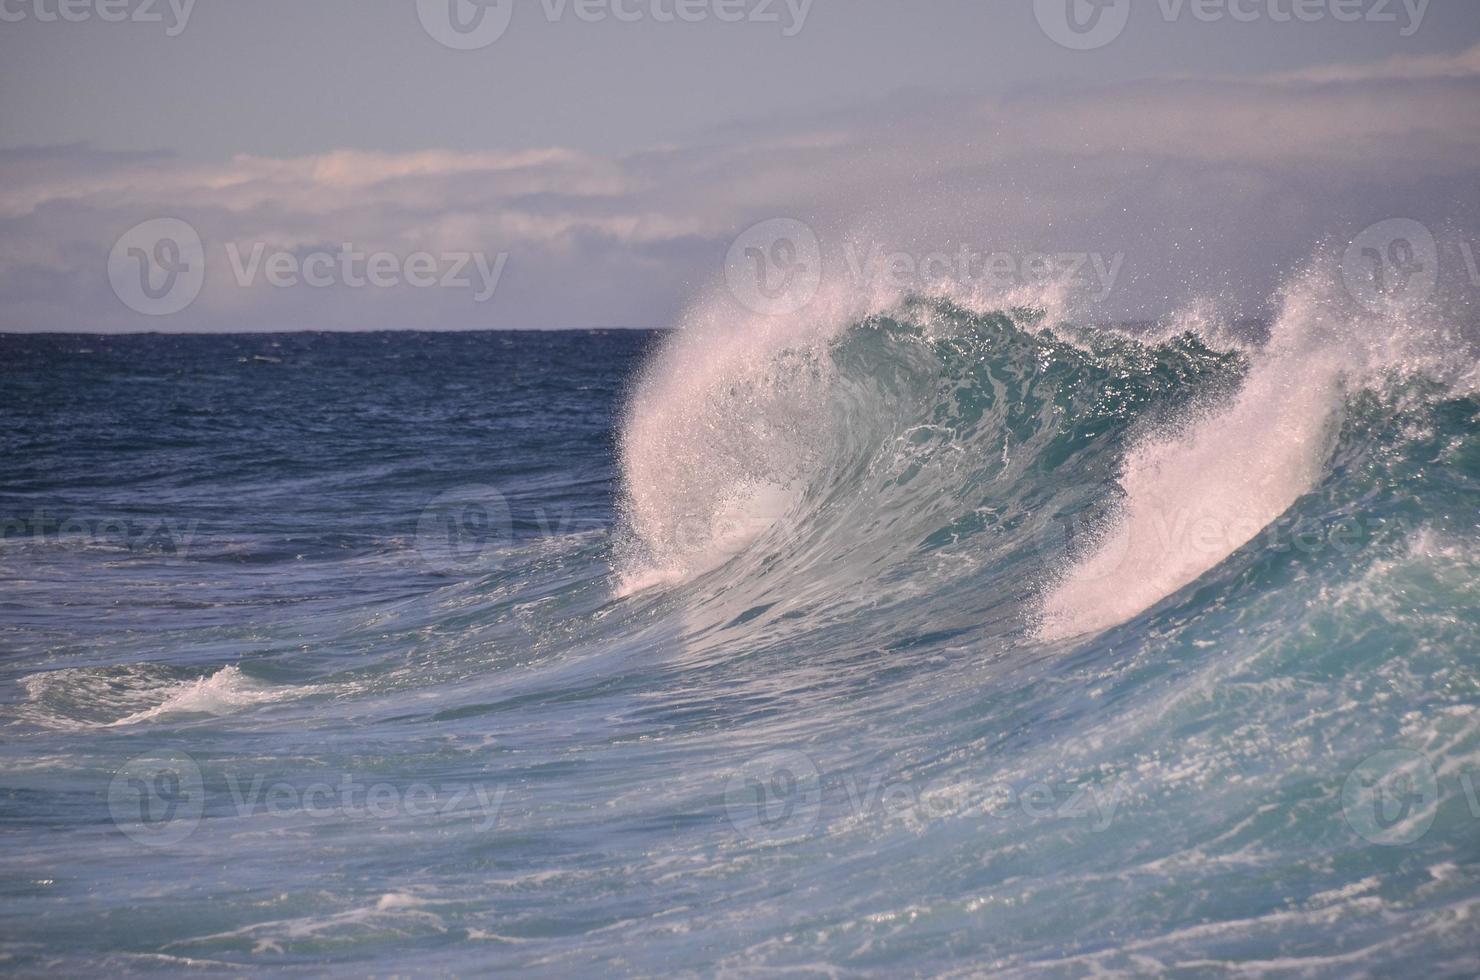 enormes ondas do mar foto